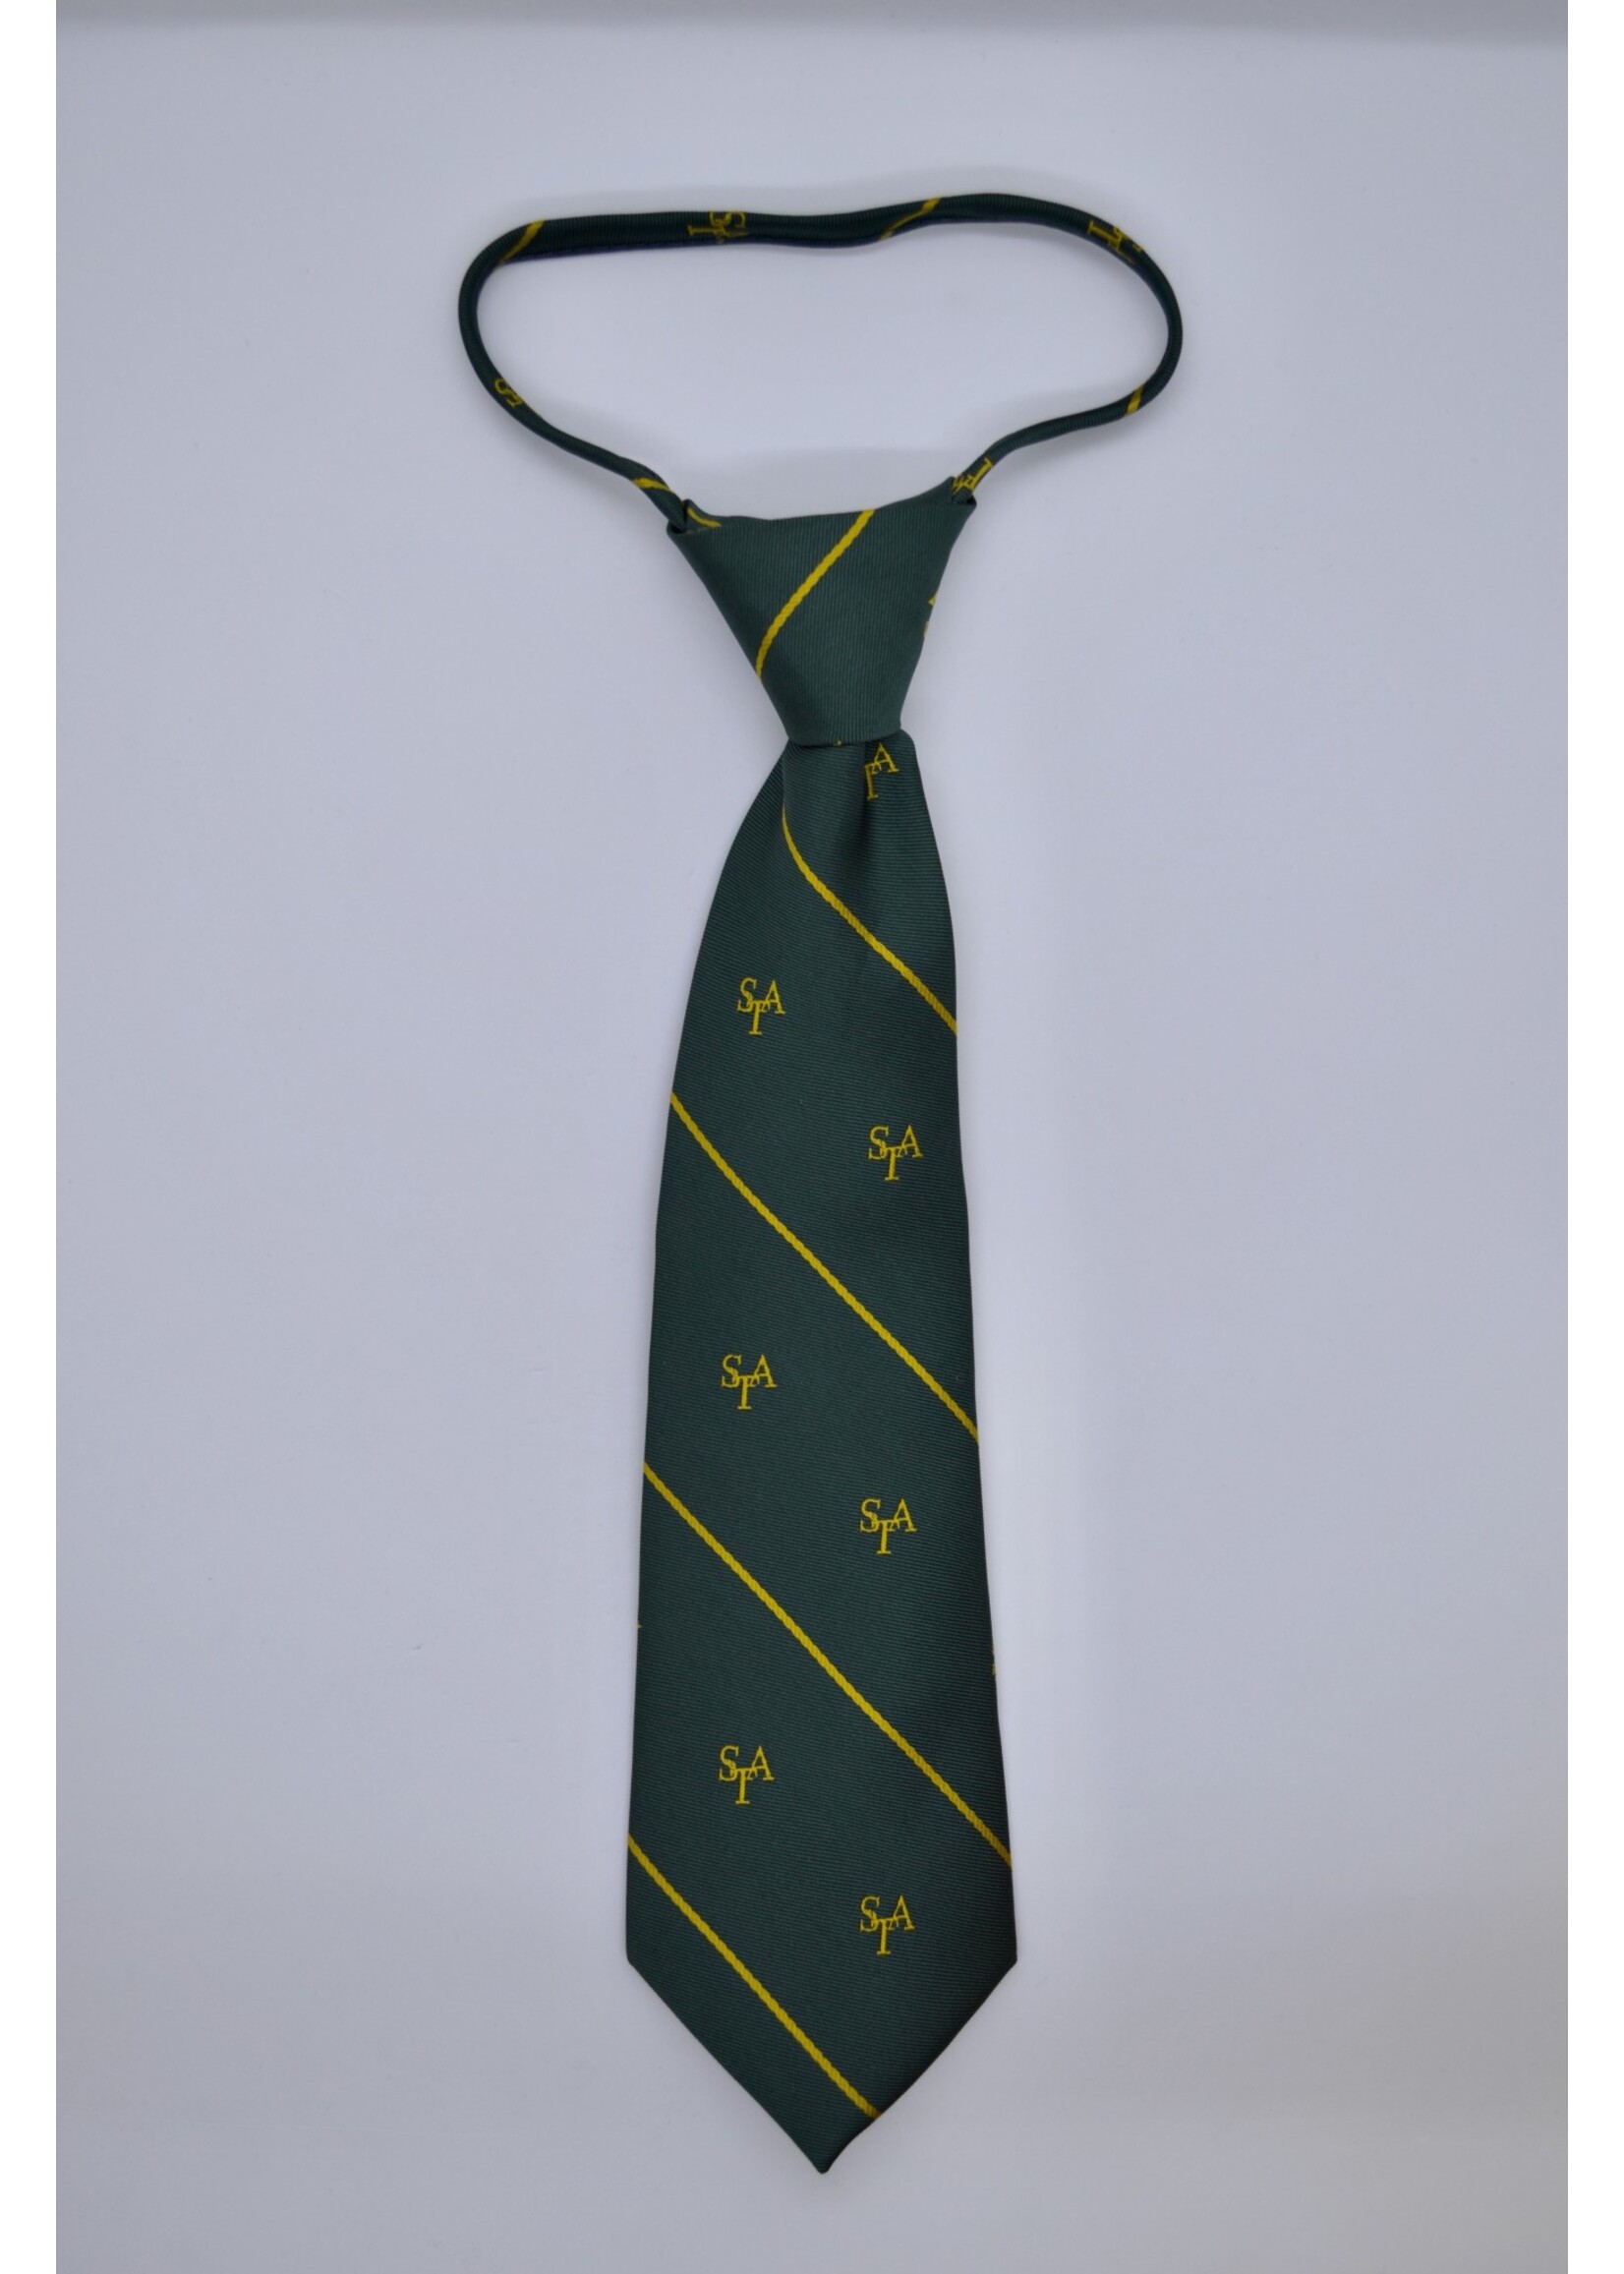 STA Zippered Neck Tie - Logo'd